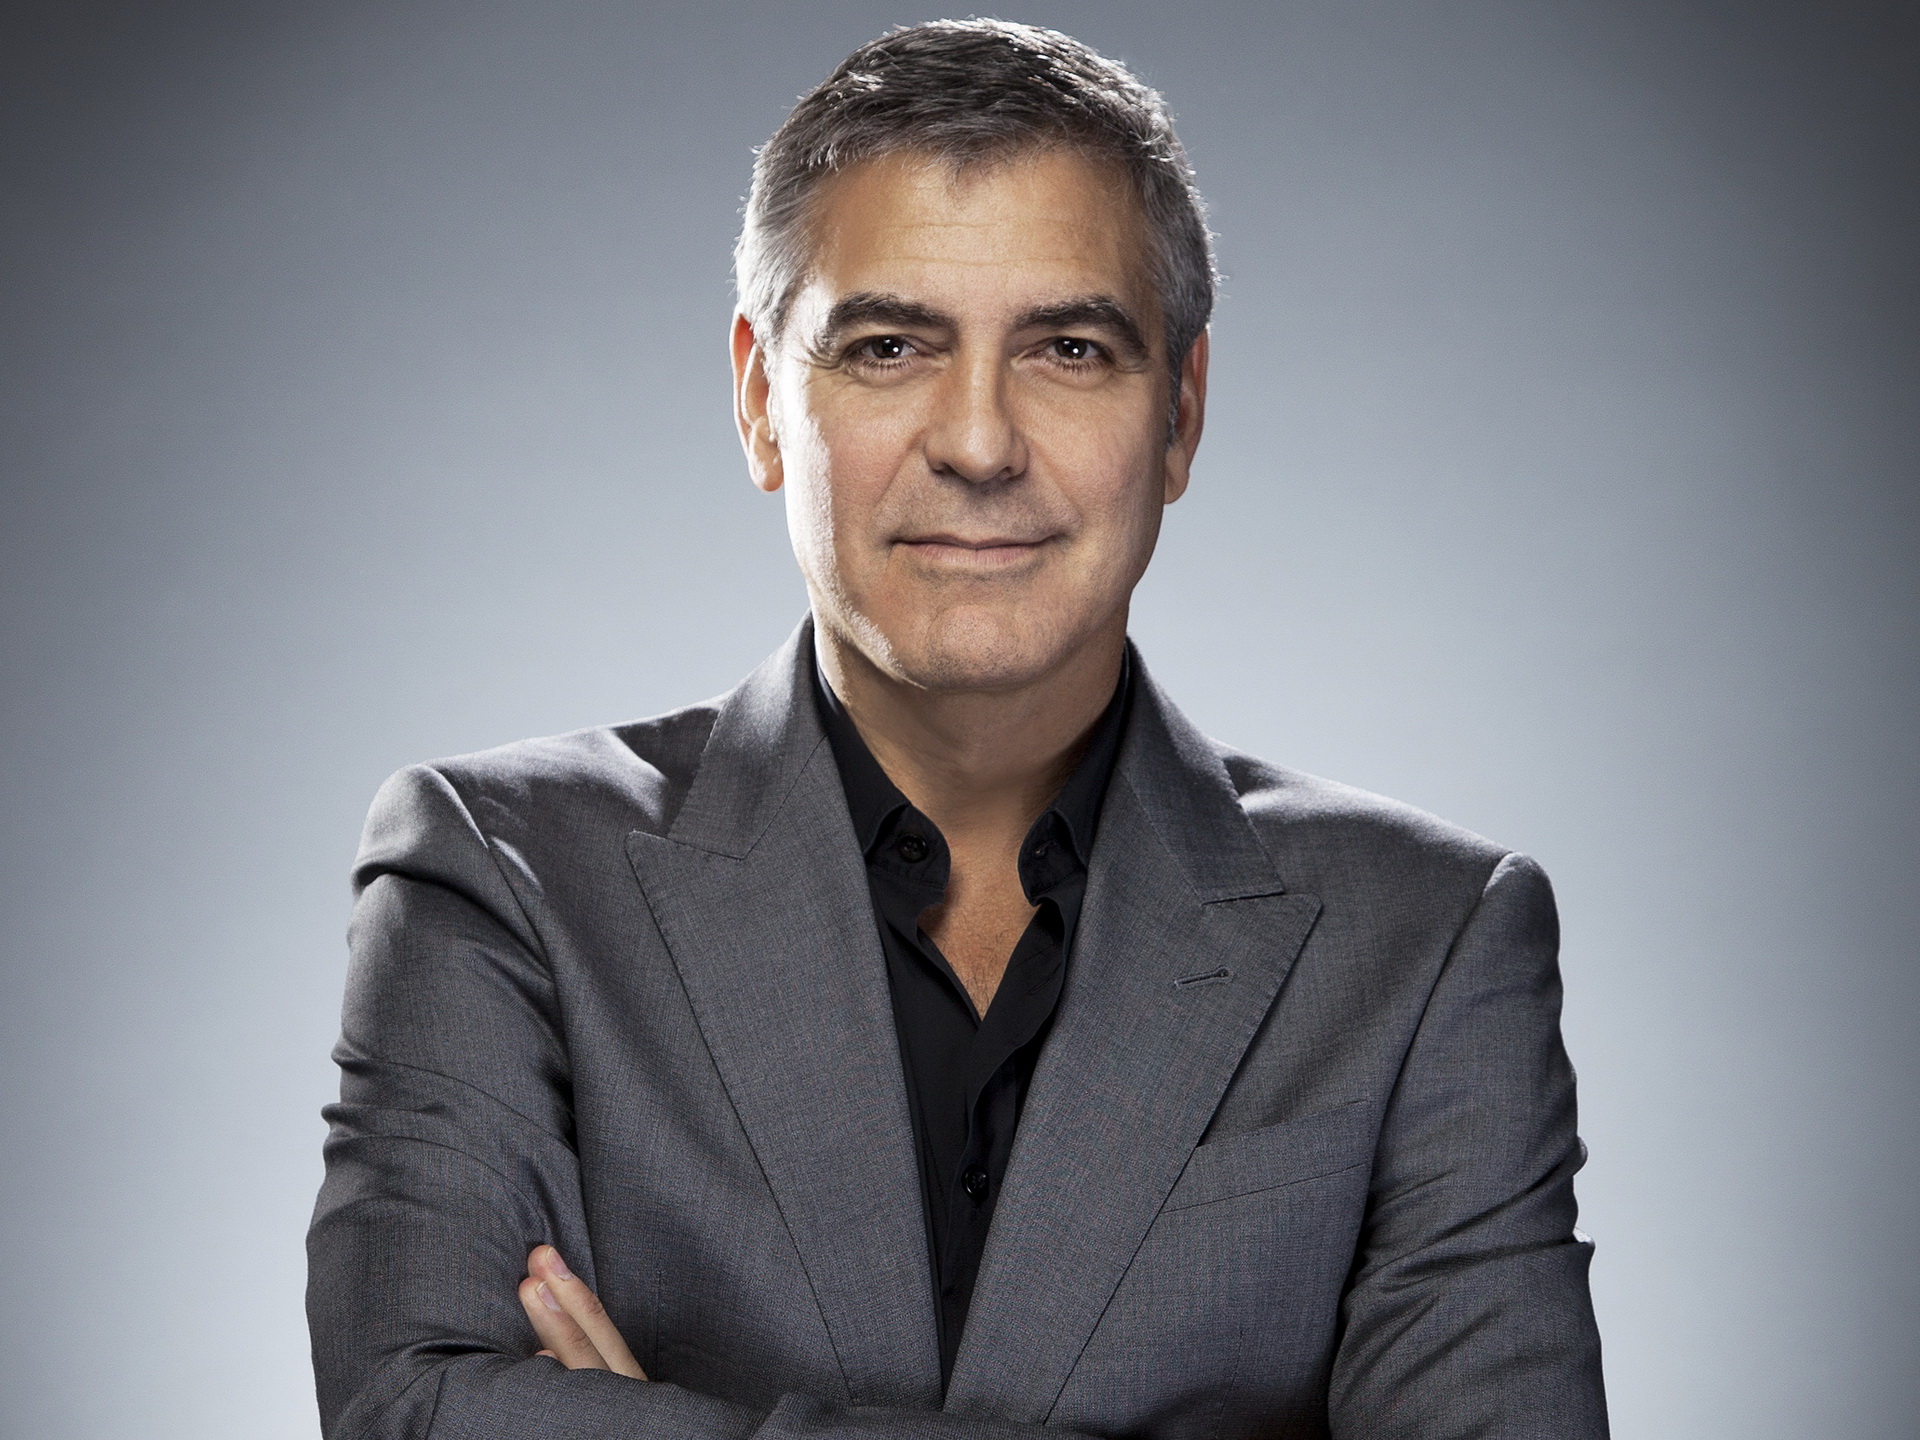 George Clooney Smile wallpaper